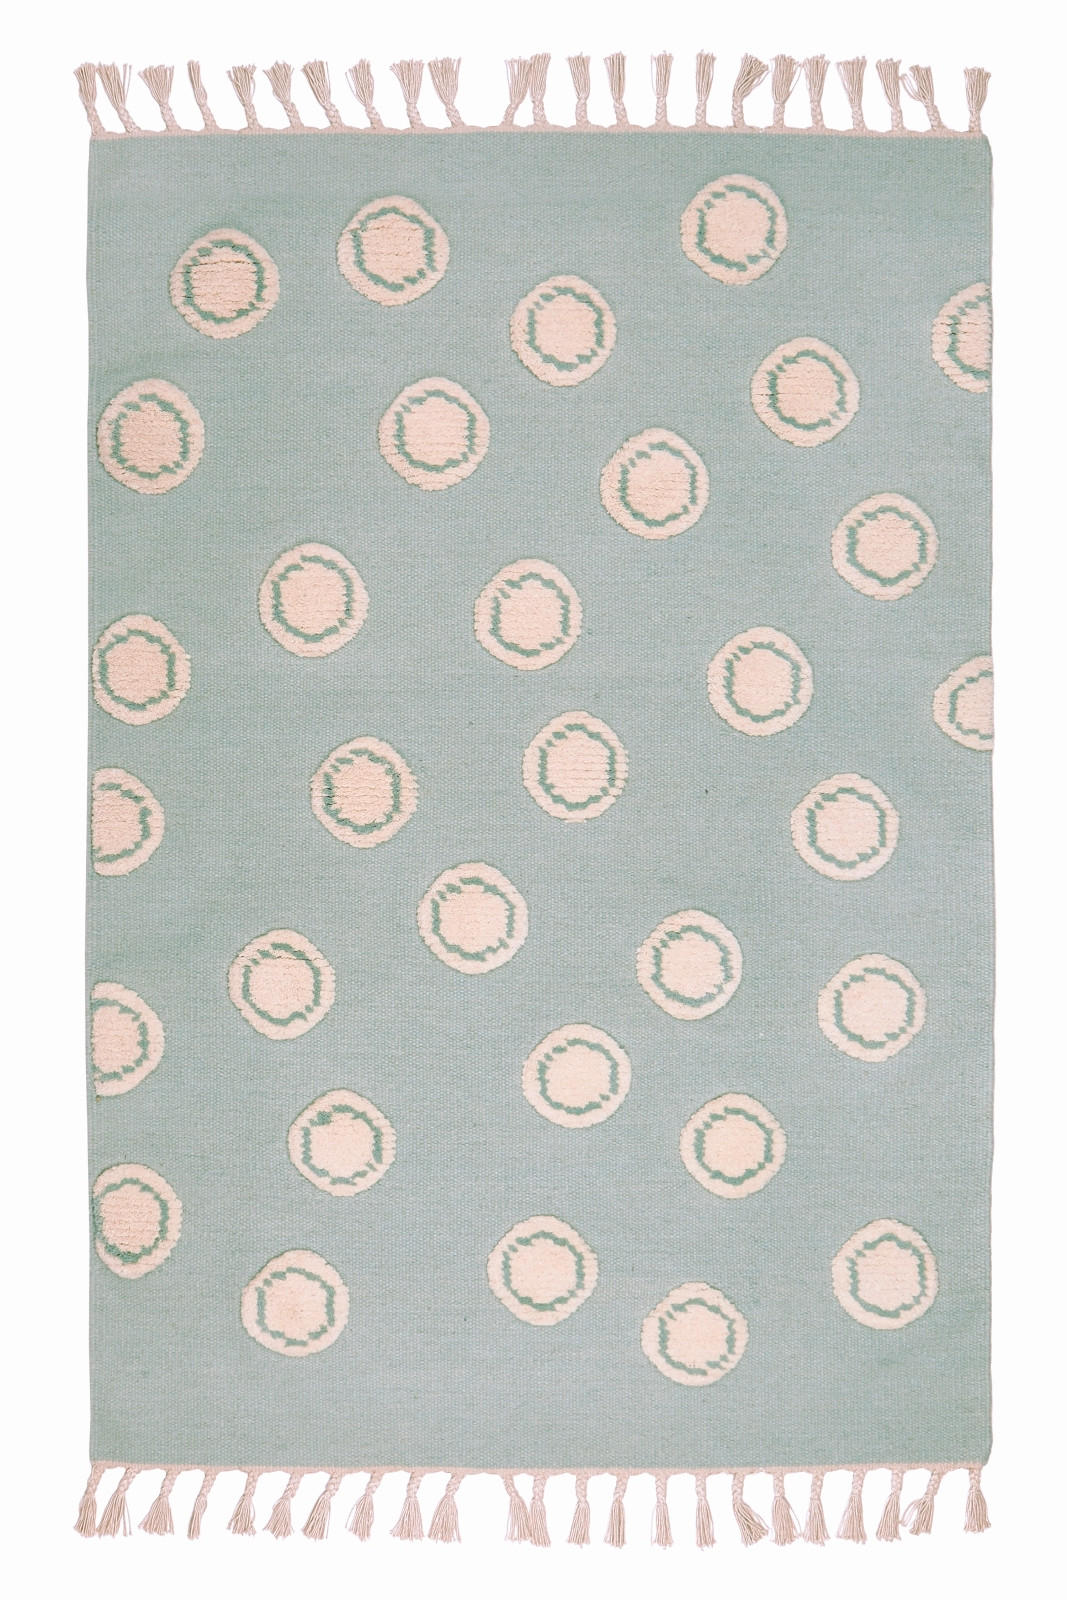 KINDERTEPPICH Happy Rugs  - Naturfarben/Mintgrün, Trend, Textil (160/230cm)